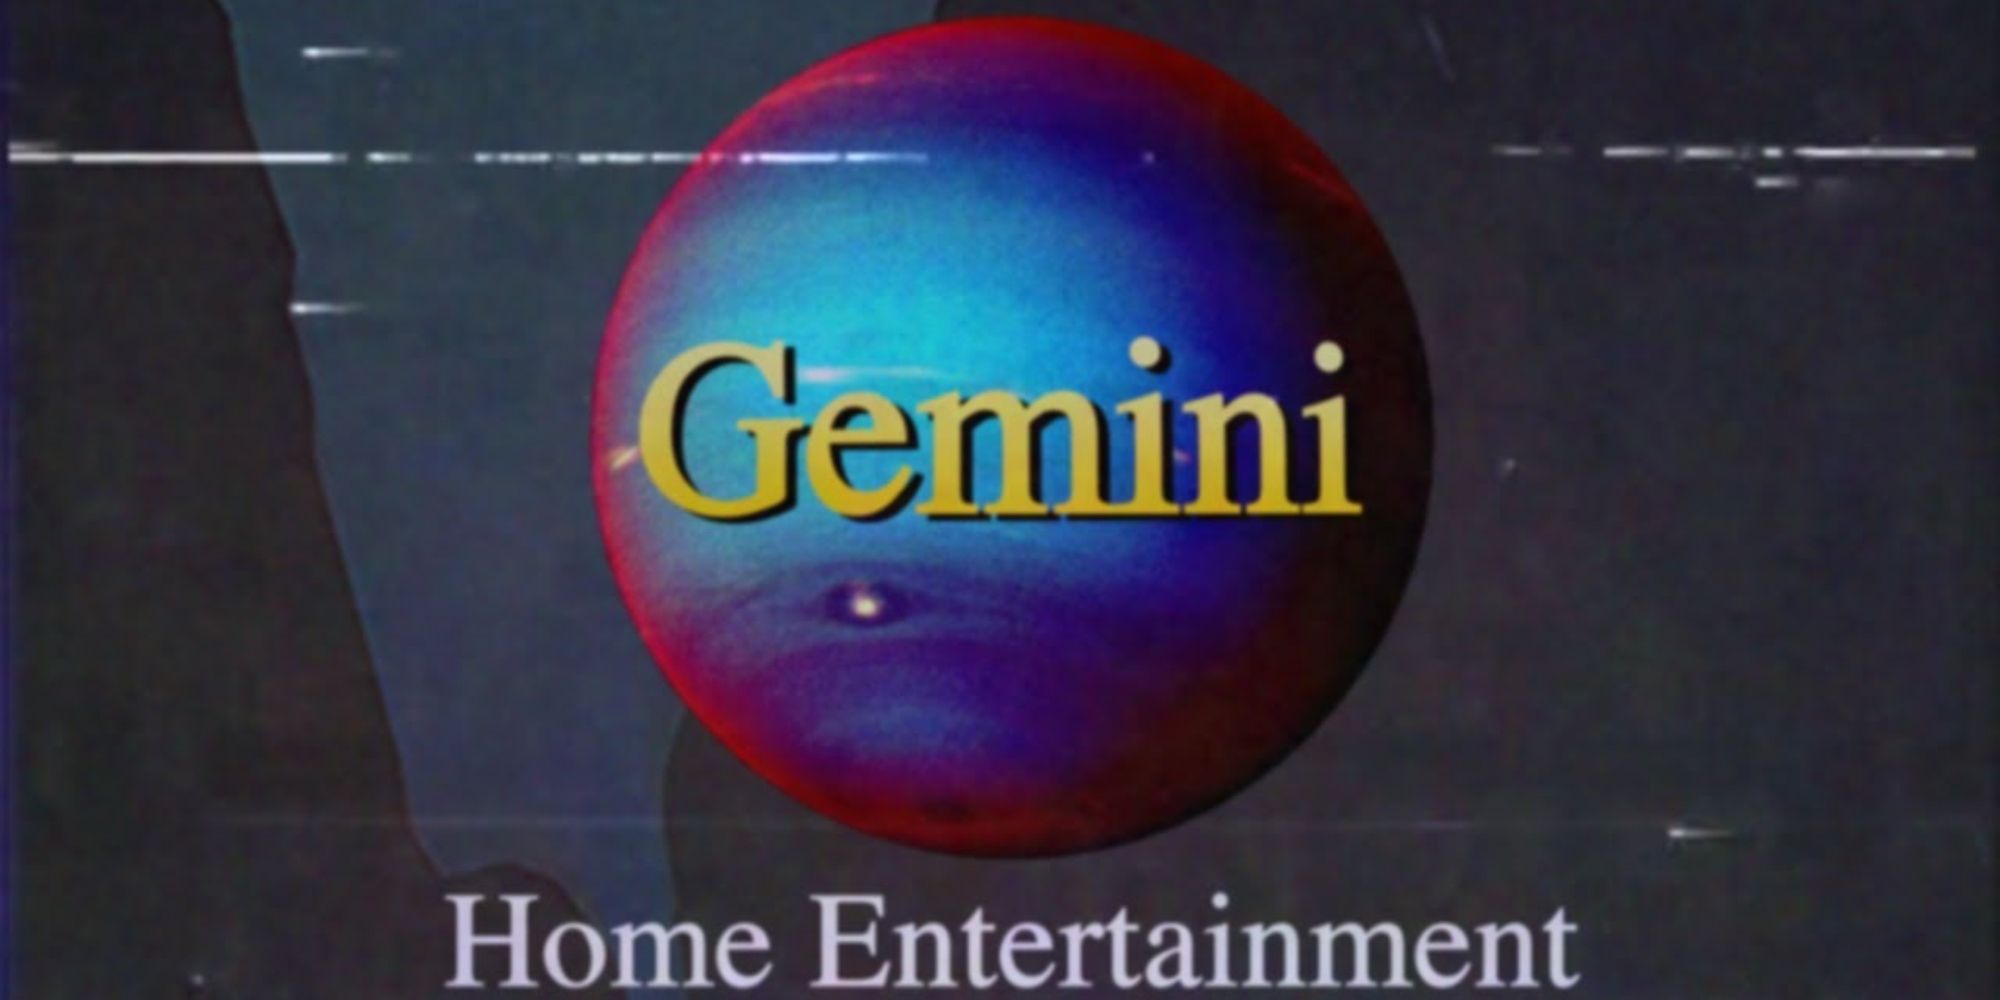 The logo for Gemini Home Entertainment.